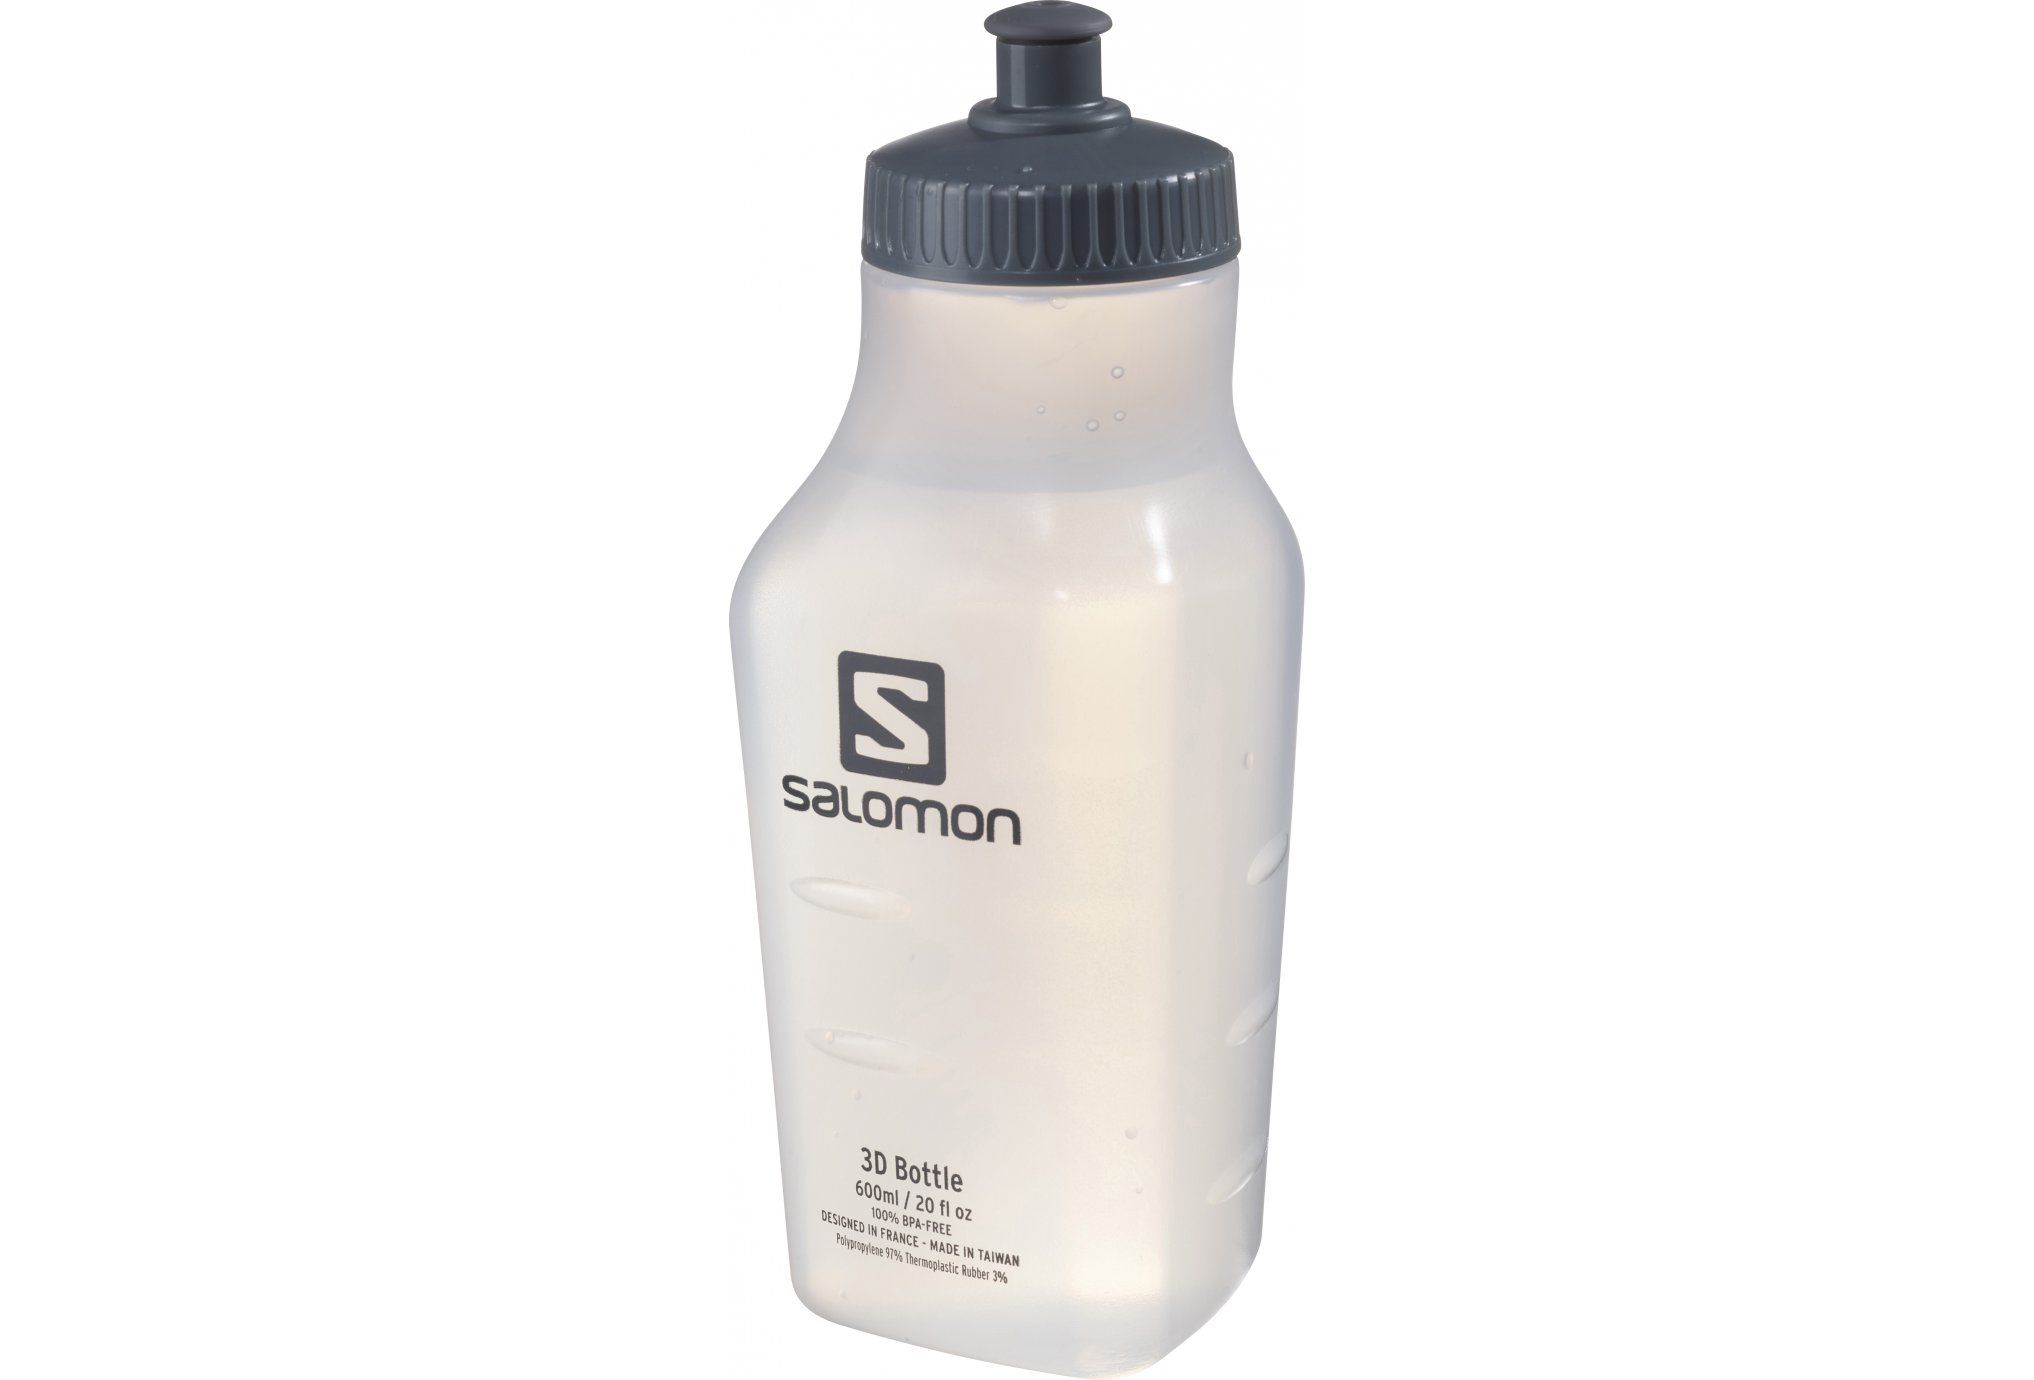 Salomon 3D Bottle 600 mL Sac hydratation / Gourde